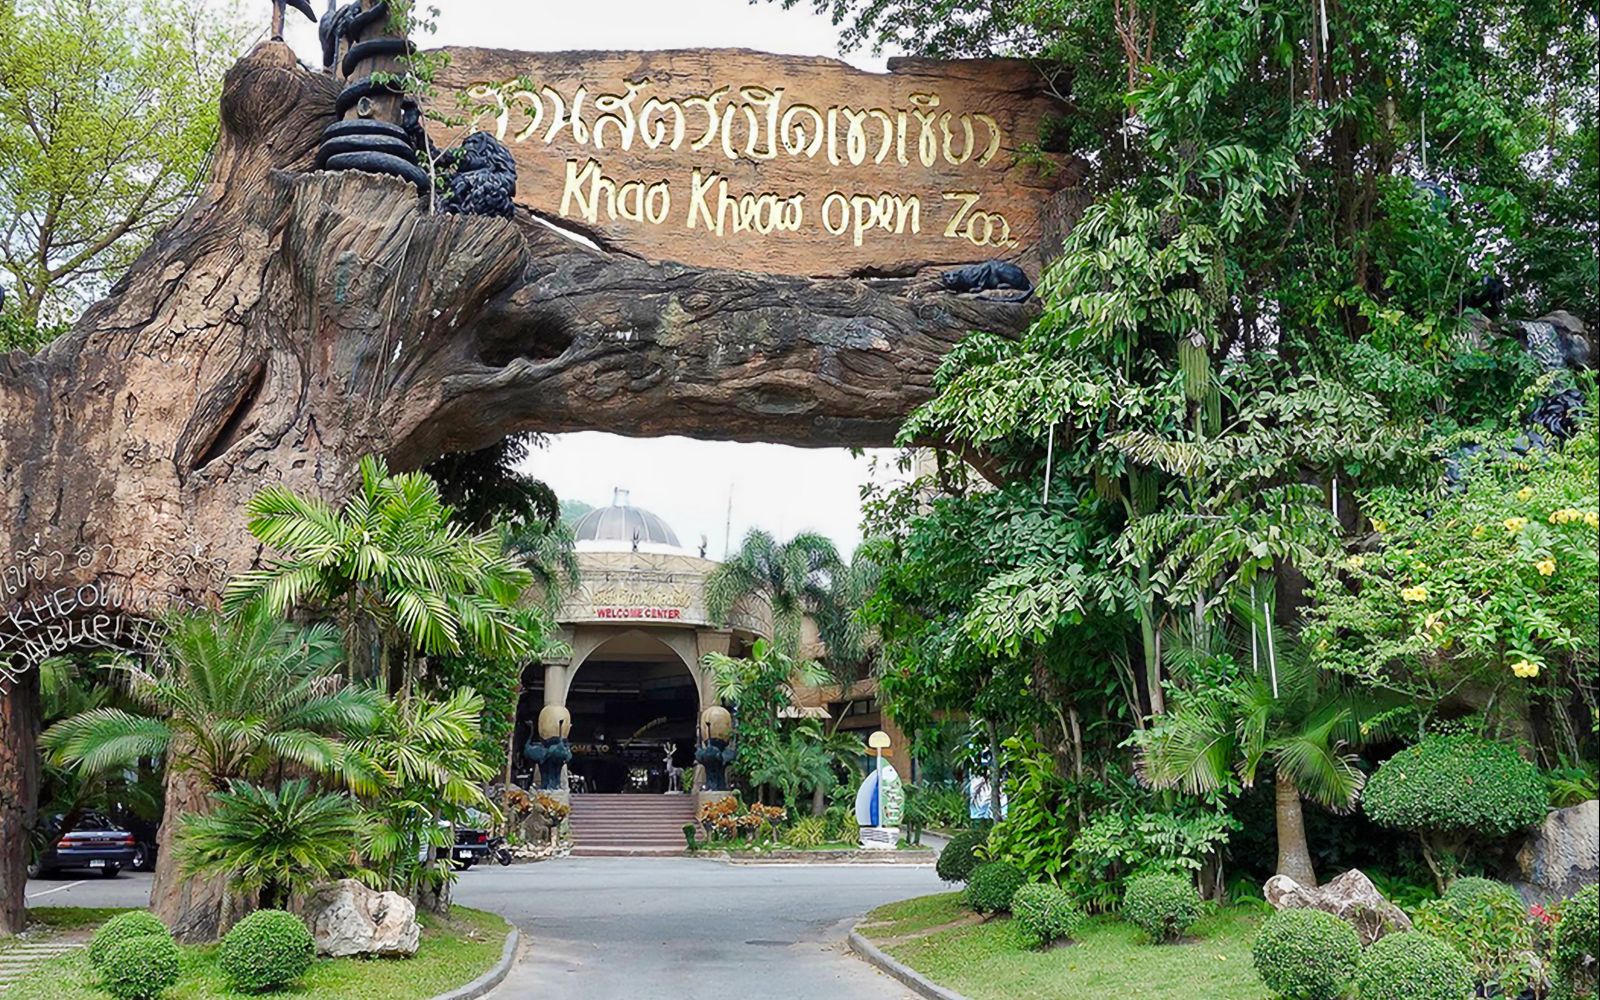 Imagen del tour: Tickets to Khao Kheow Open Zoo